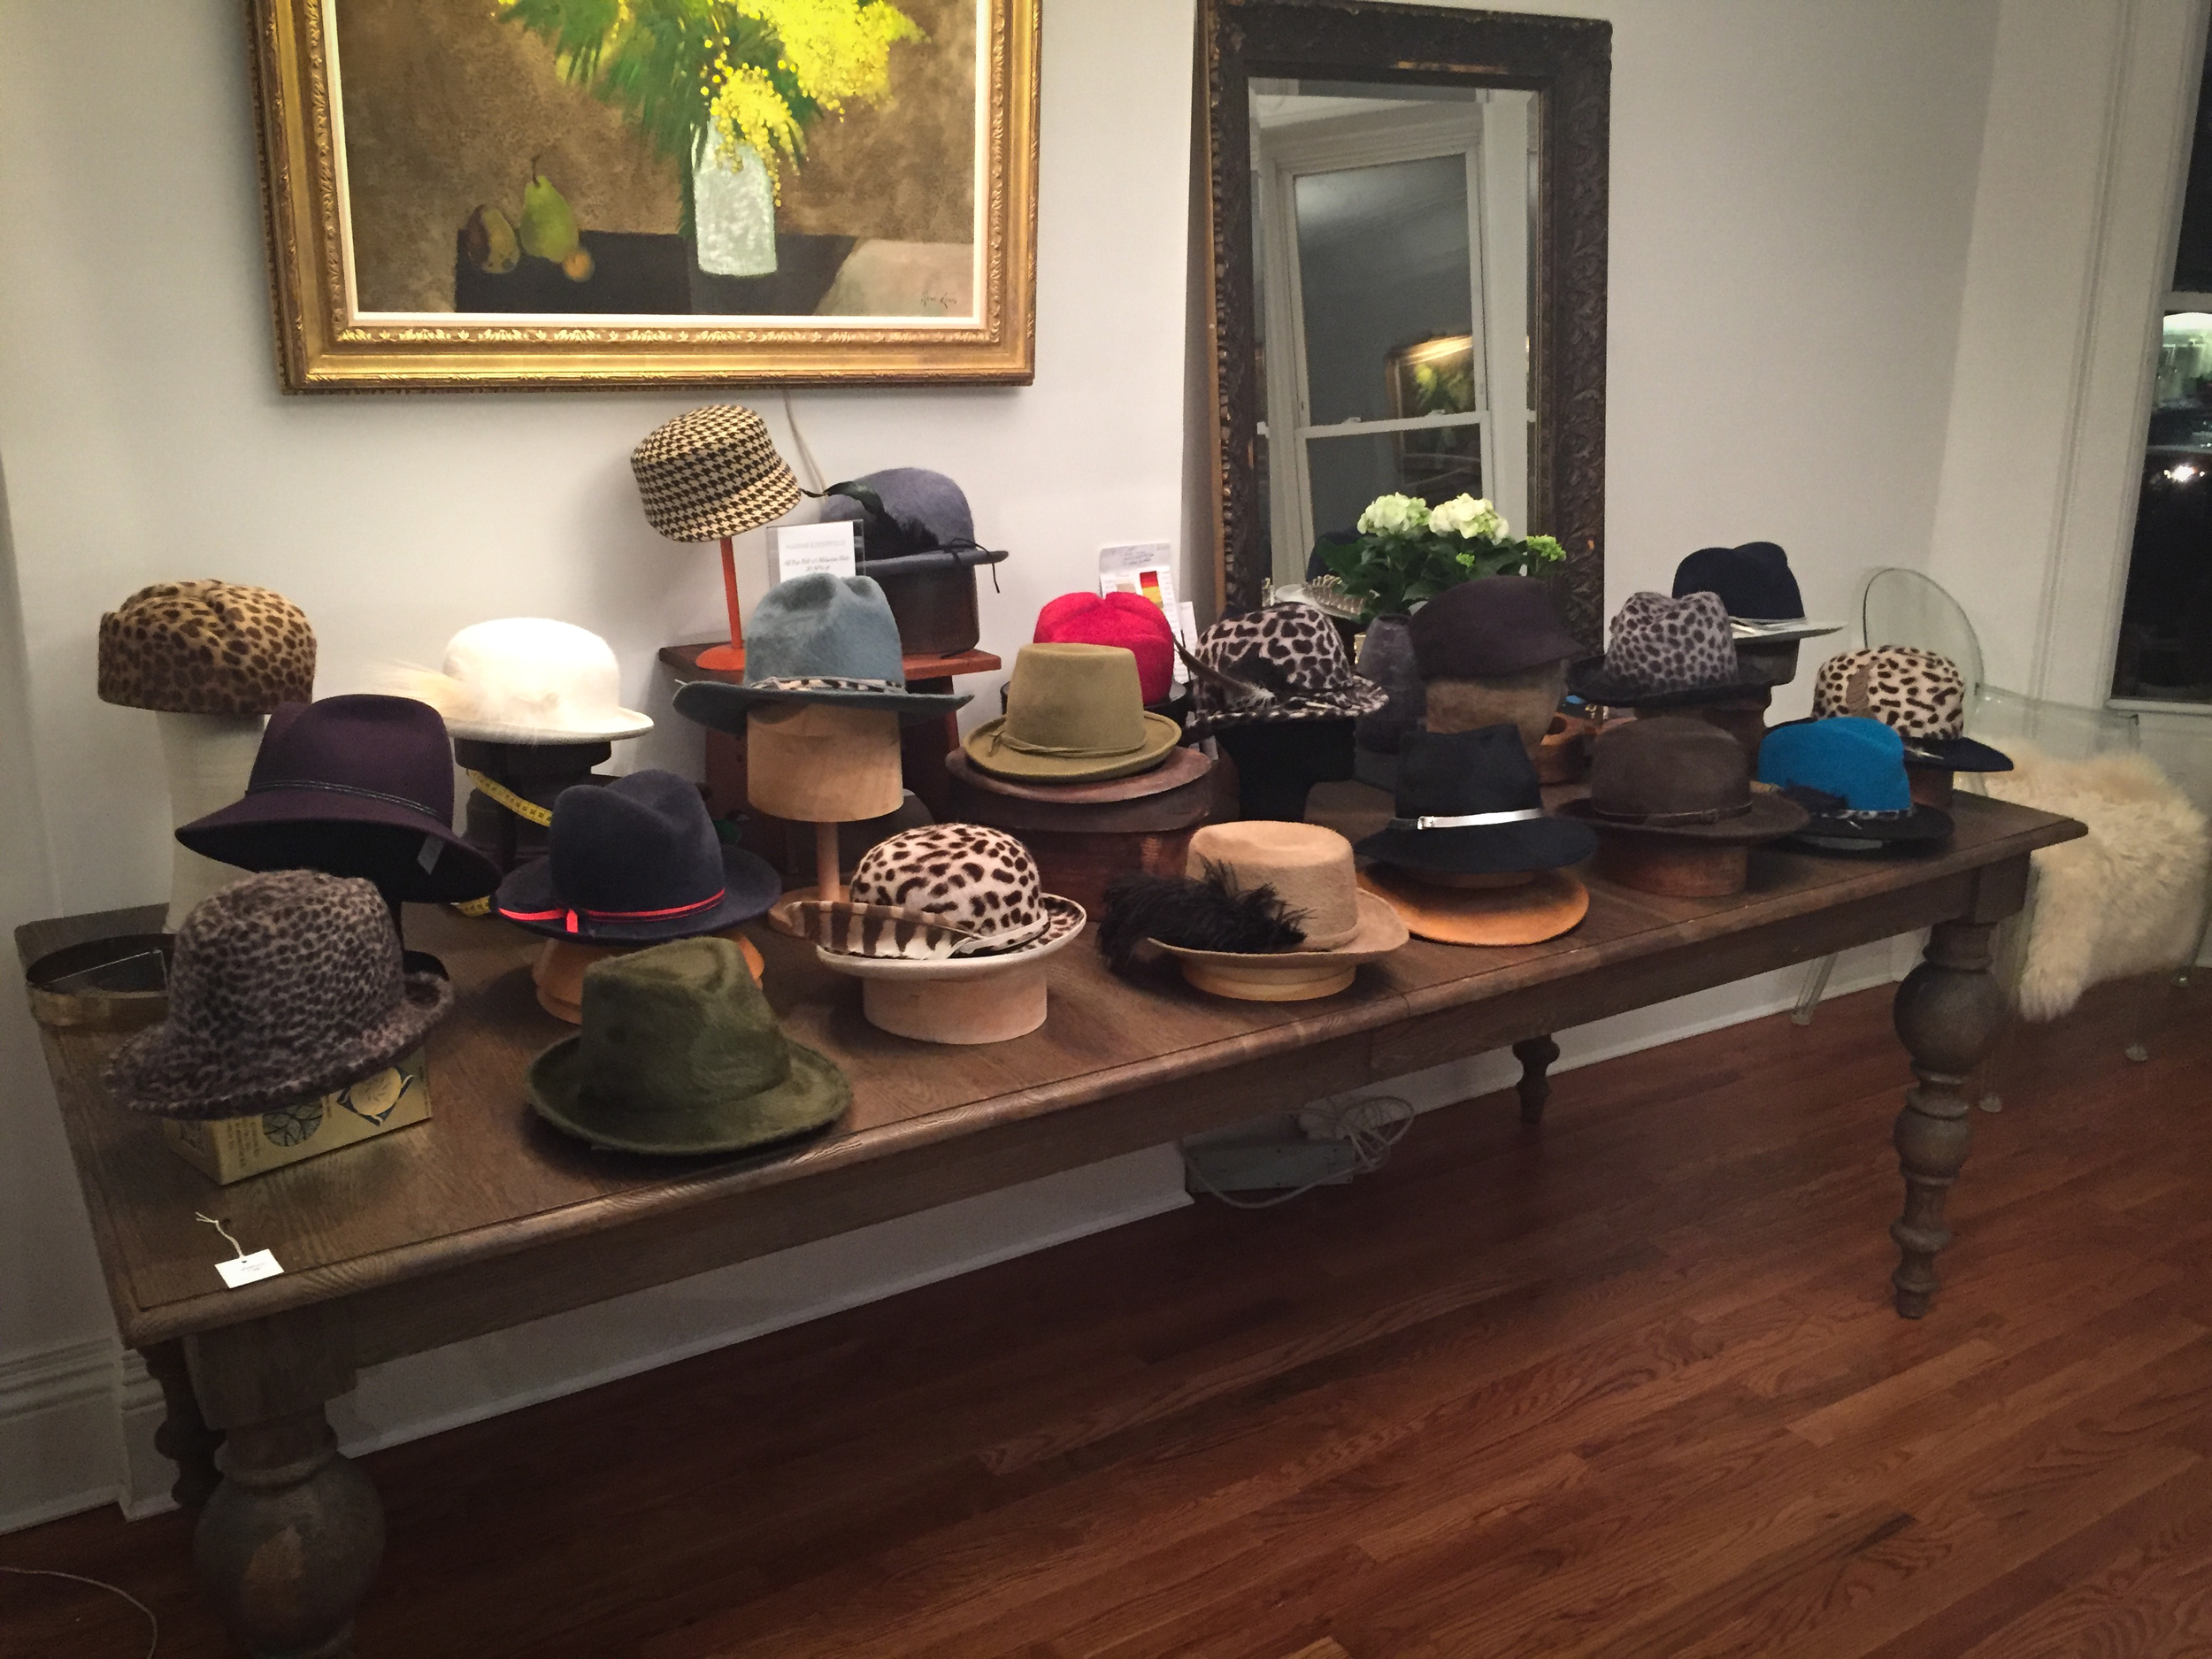 Display of mixed felt hats